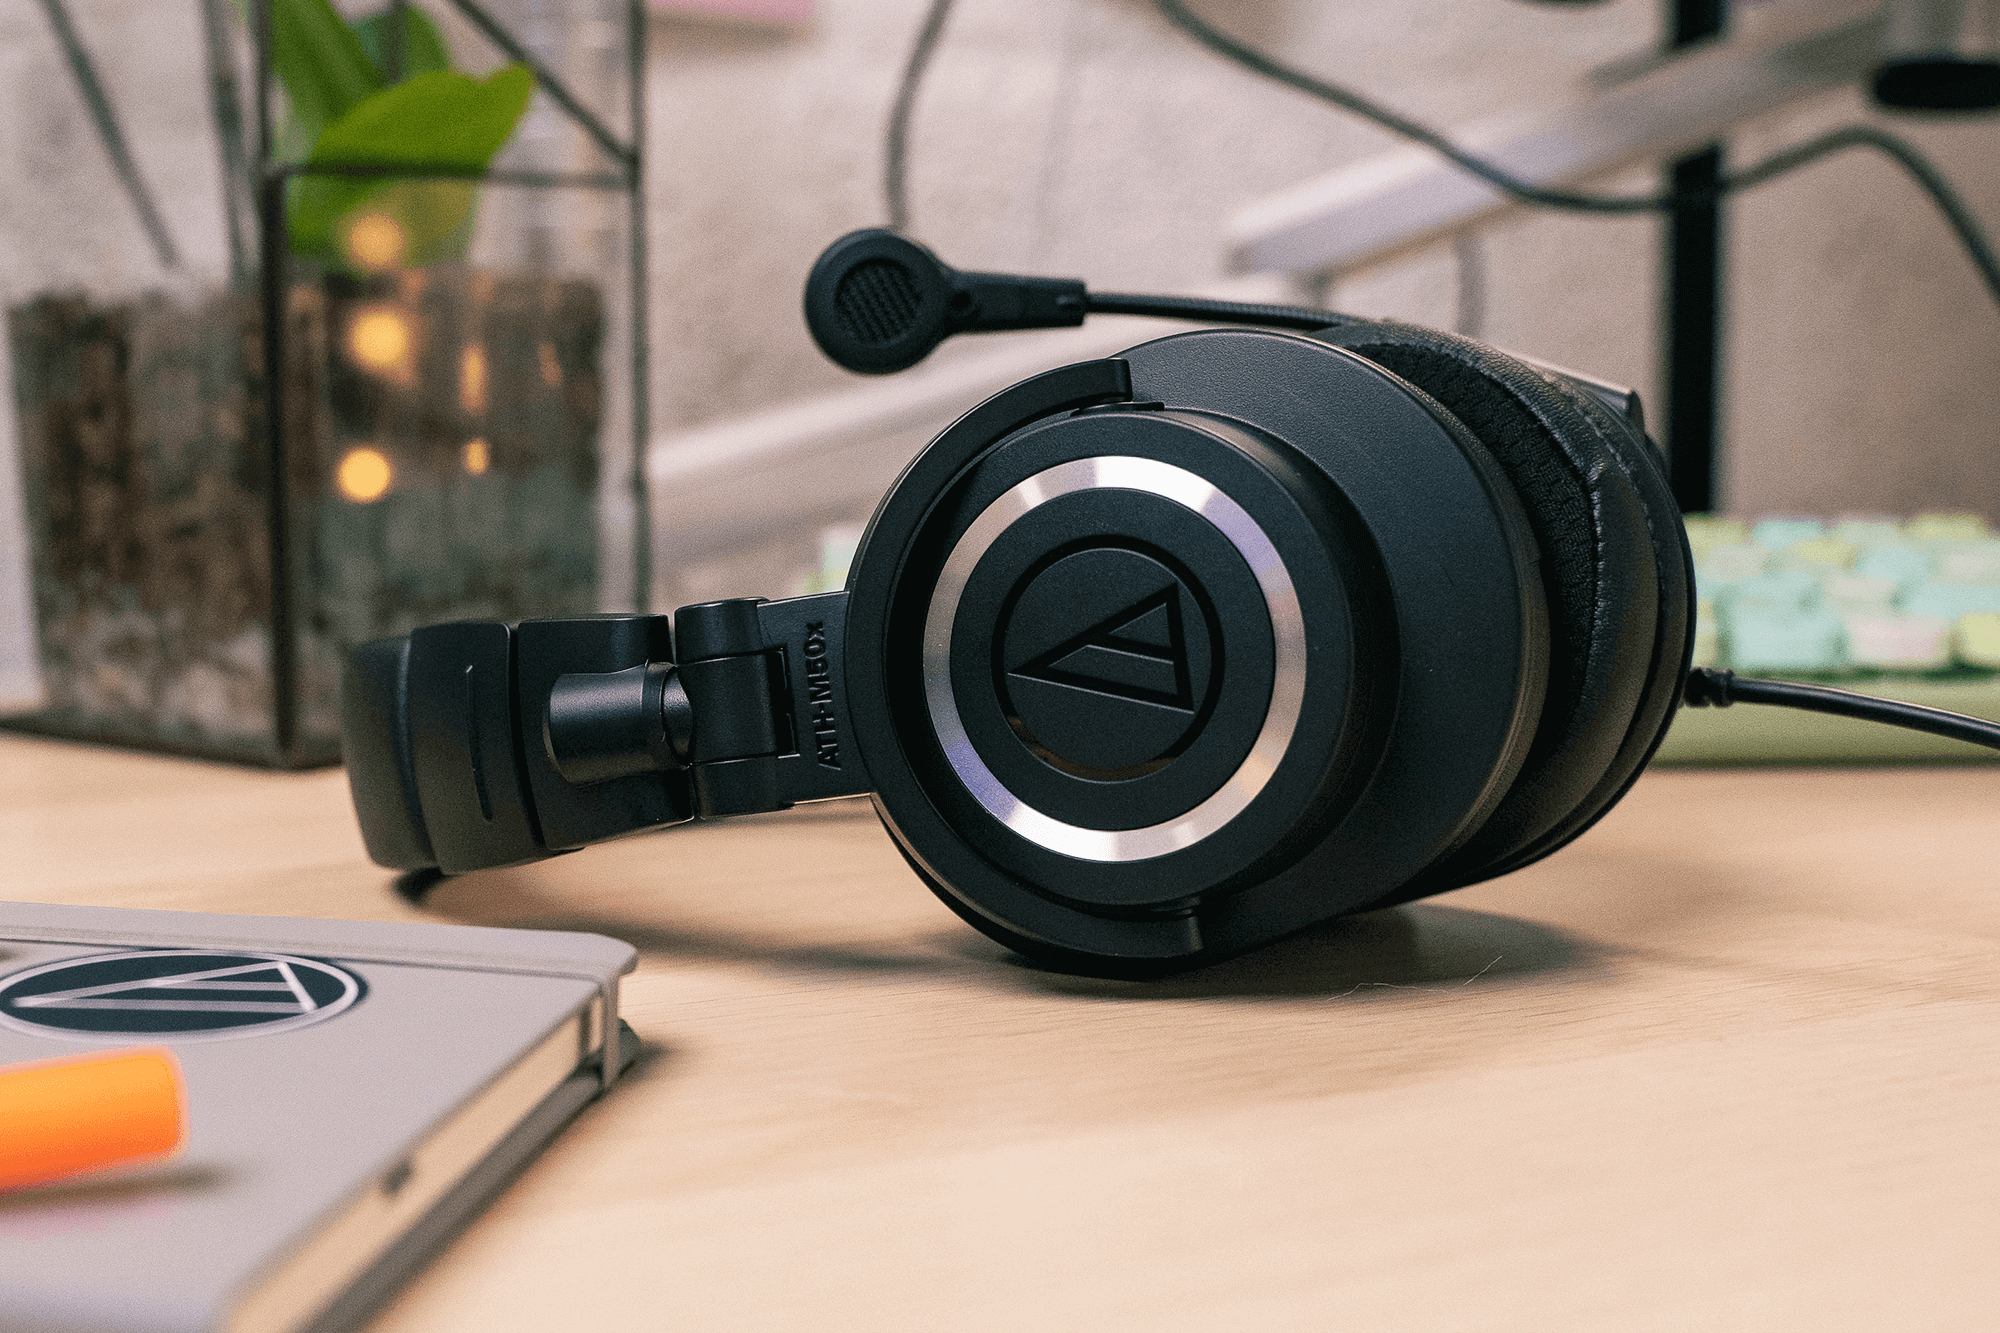 Audio-Technica's M50xSTS headphones are aimed at content creators